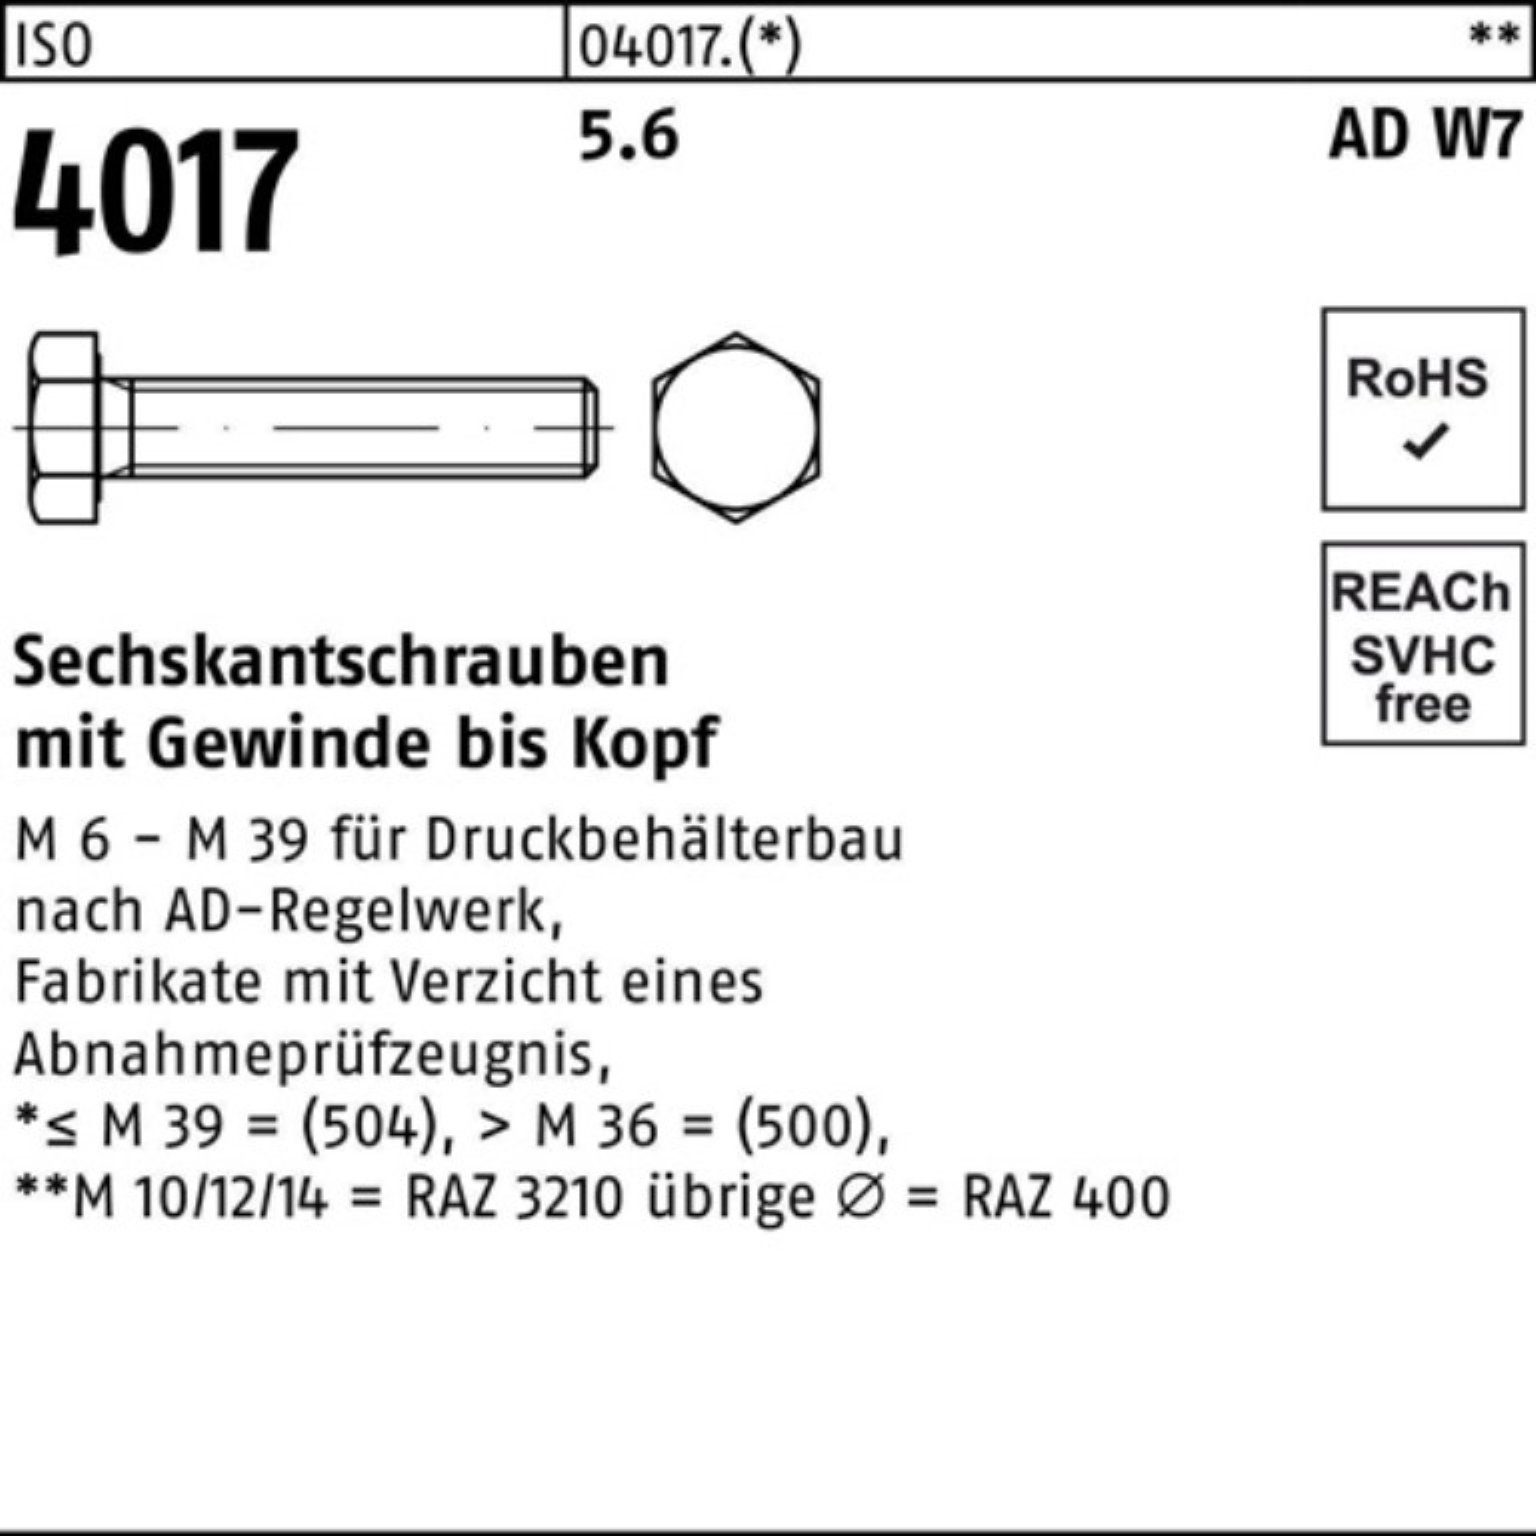 M6x 500 I Sechskantschraube Sechskantschraube 4017 Pack AD Bufab ISO 500er W7 5.6 Stück 30 VG